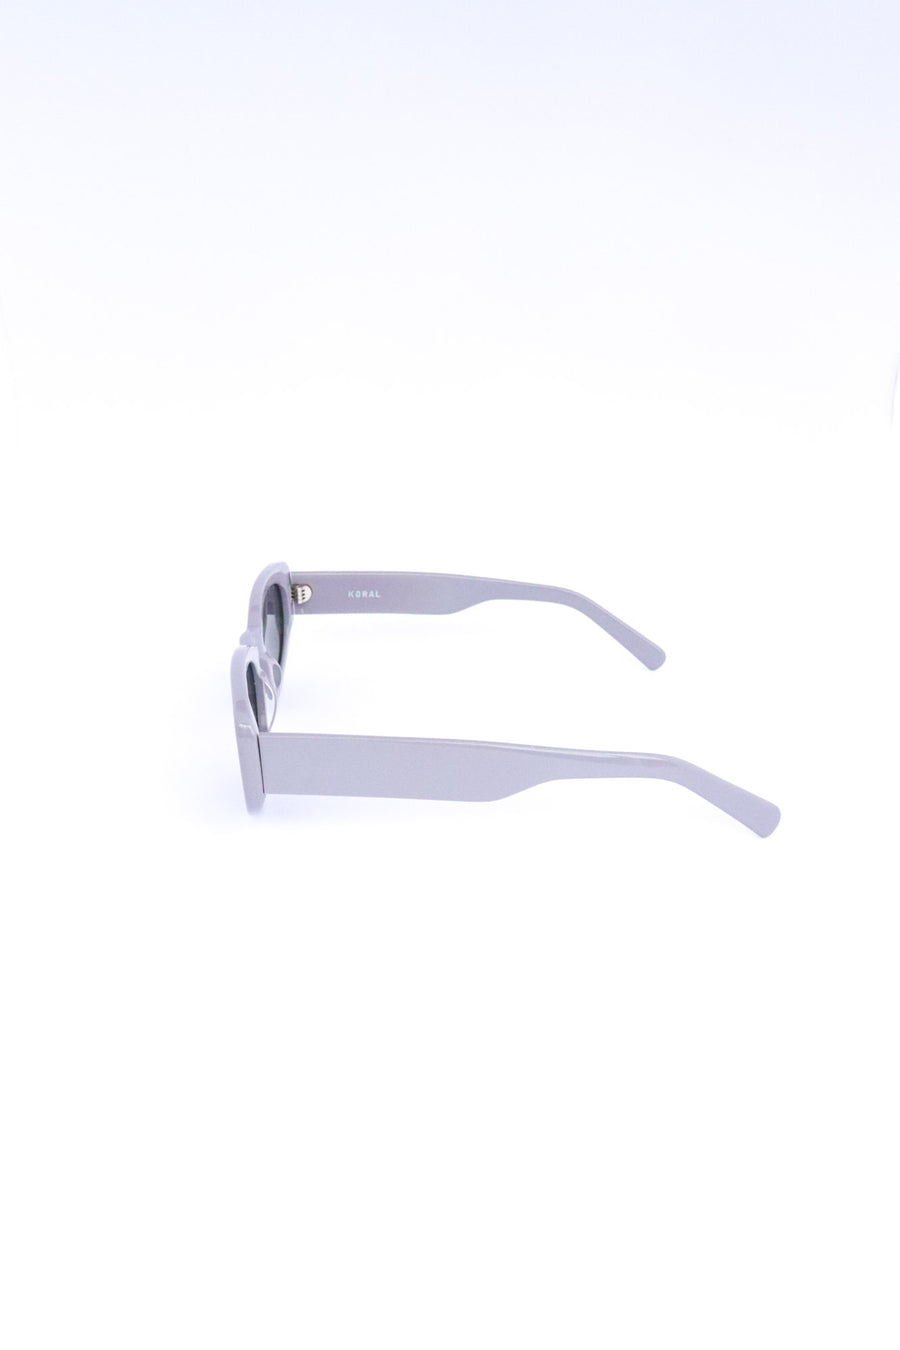 Avoir Eyewear - Koral in Mauve - Sunglasses